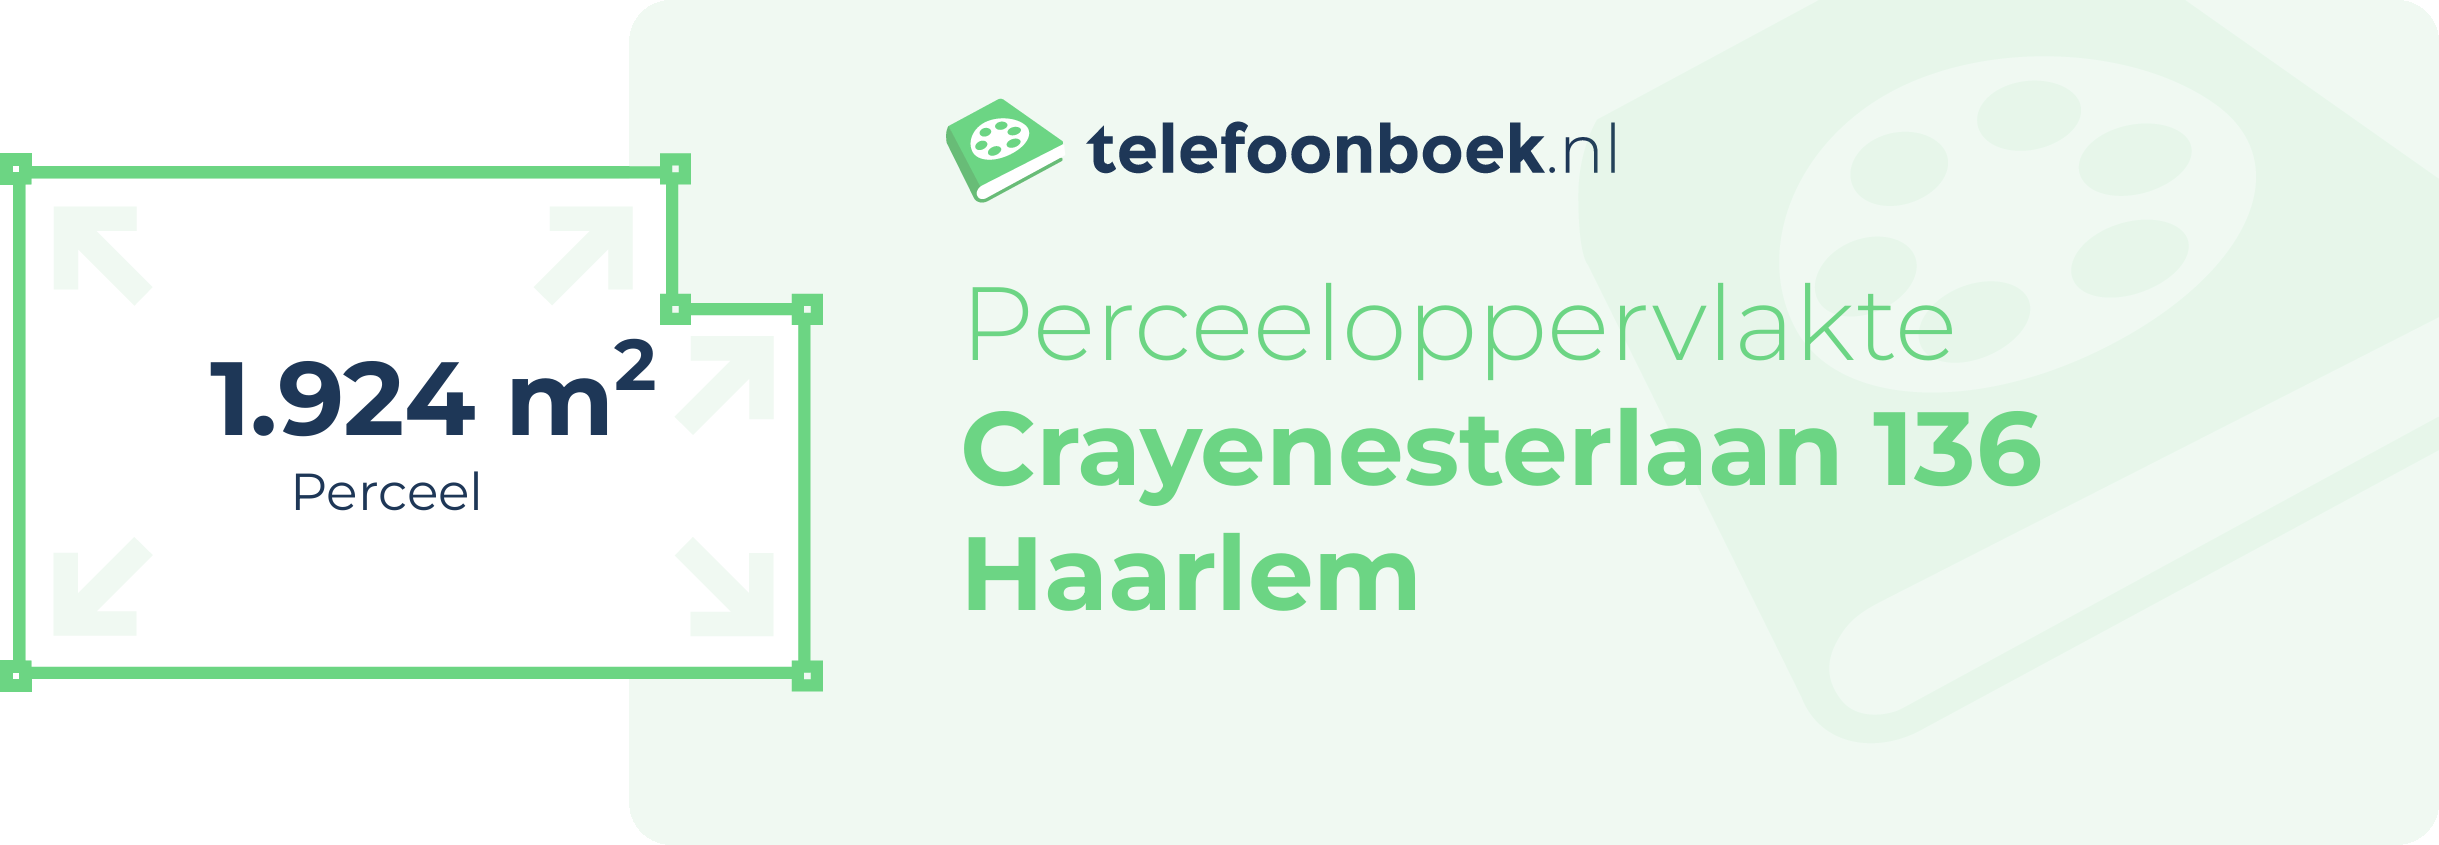 Perceeloppervlakte Crayenesterlaan 136 Haarlem